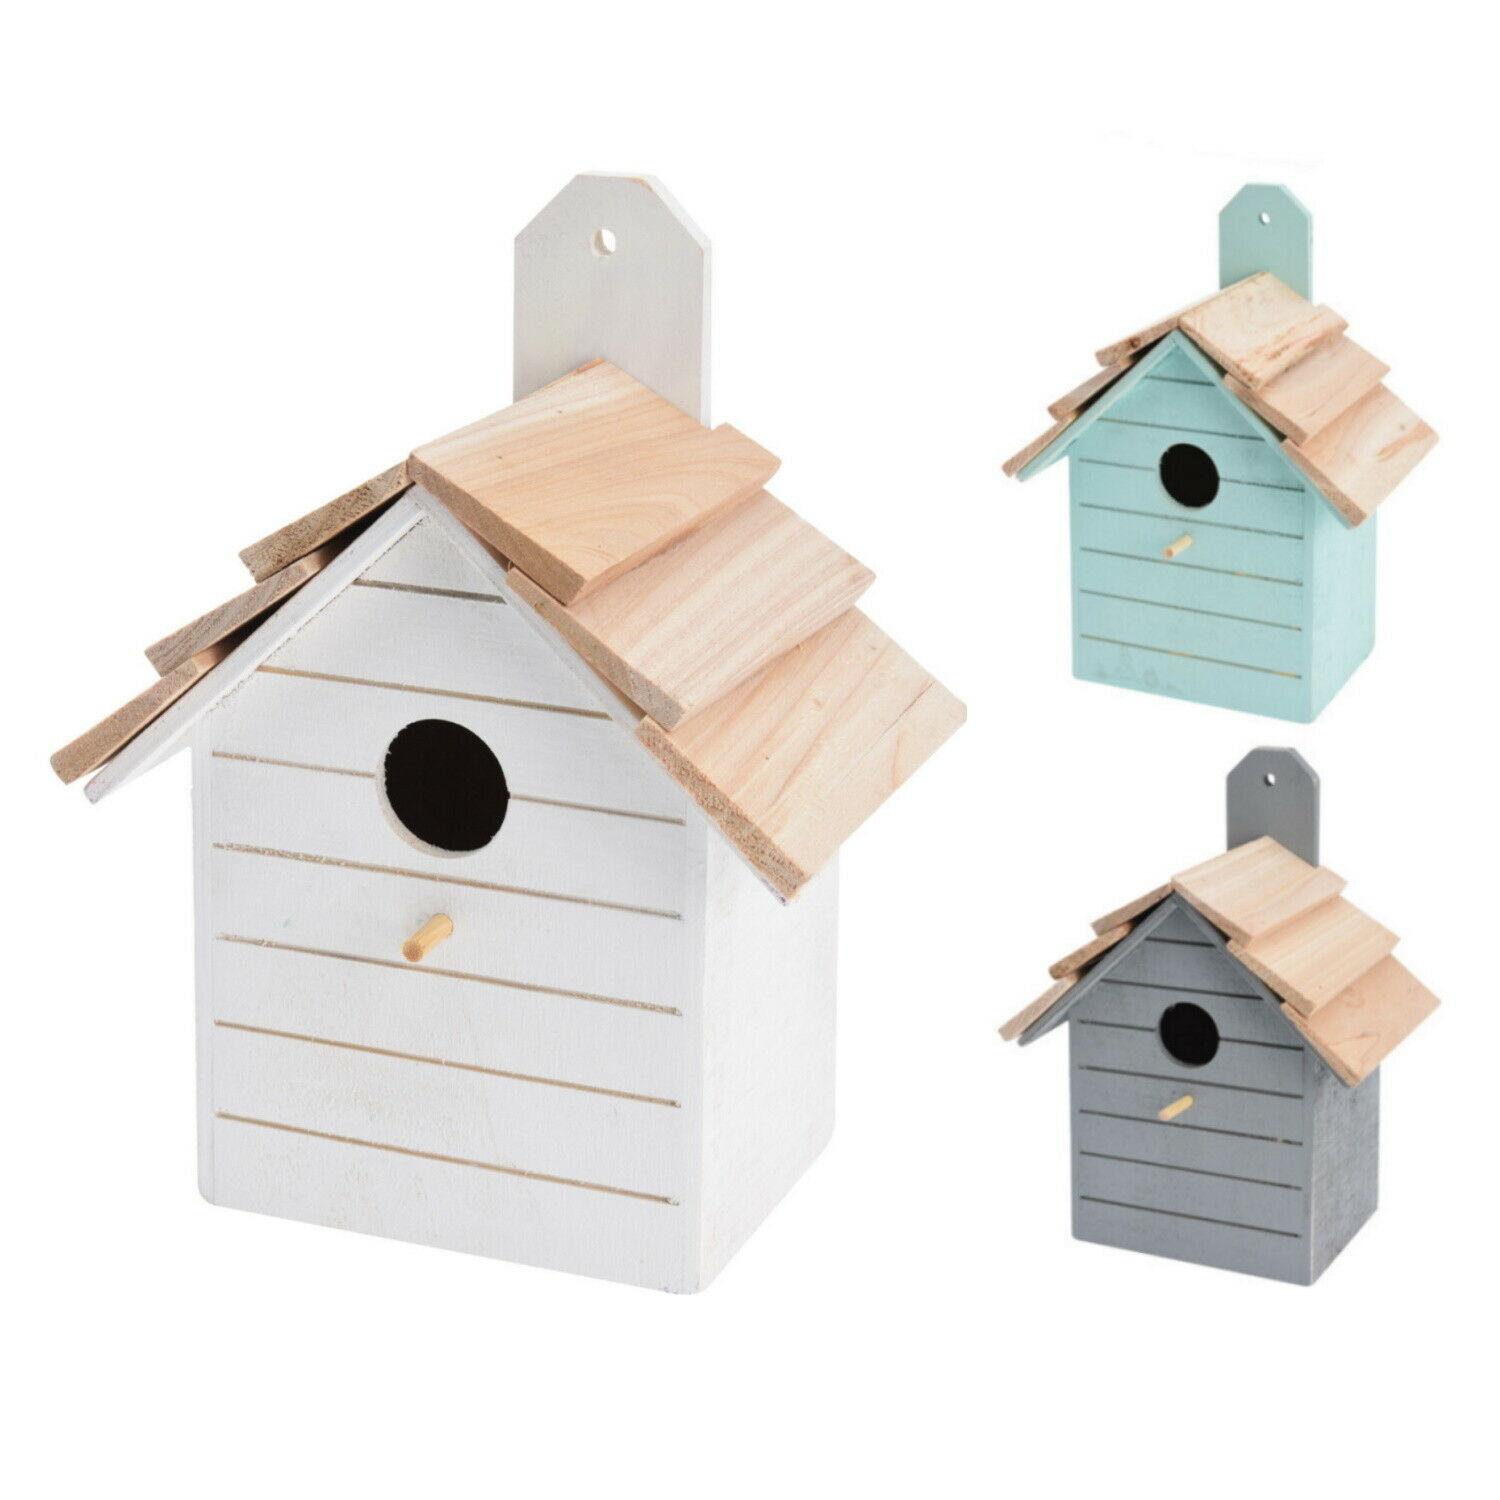 4 X WOODEN SPARROW NESTING BOXES NEST BOX BIRD HOUSE SMALL BIRDS BLUE TIT ROBIN 